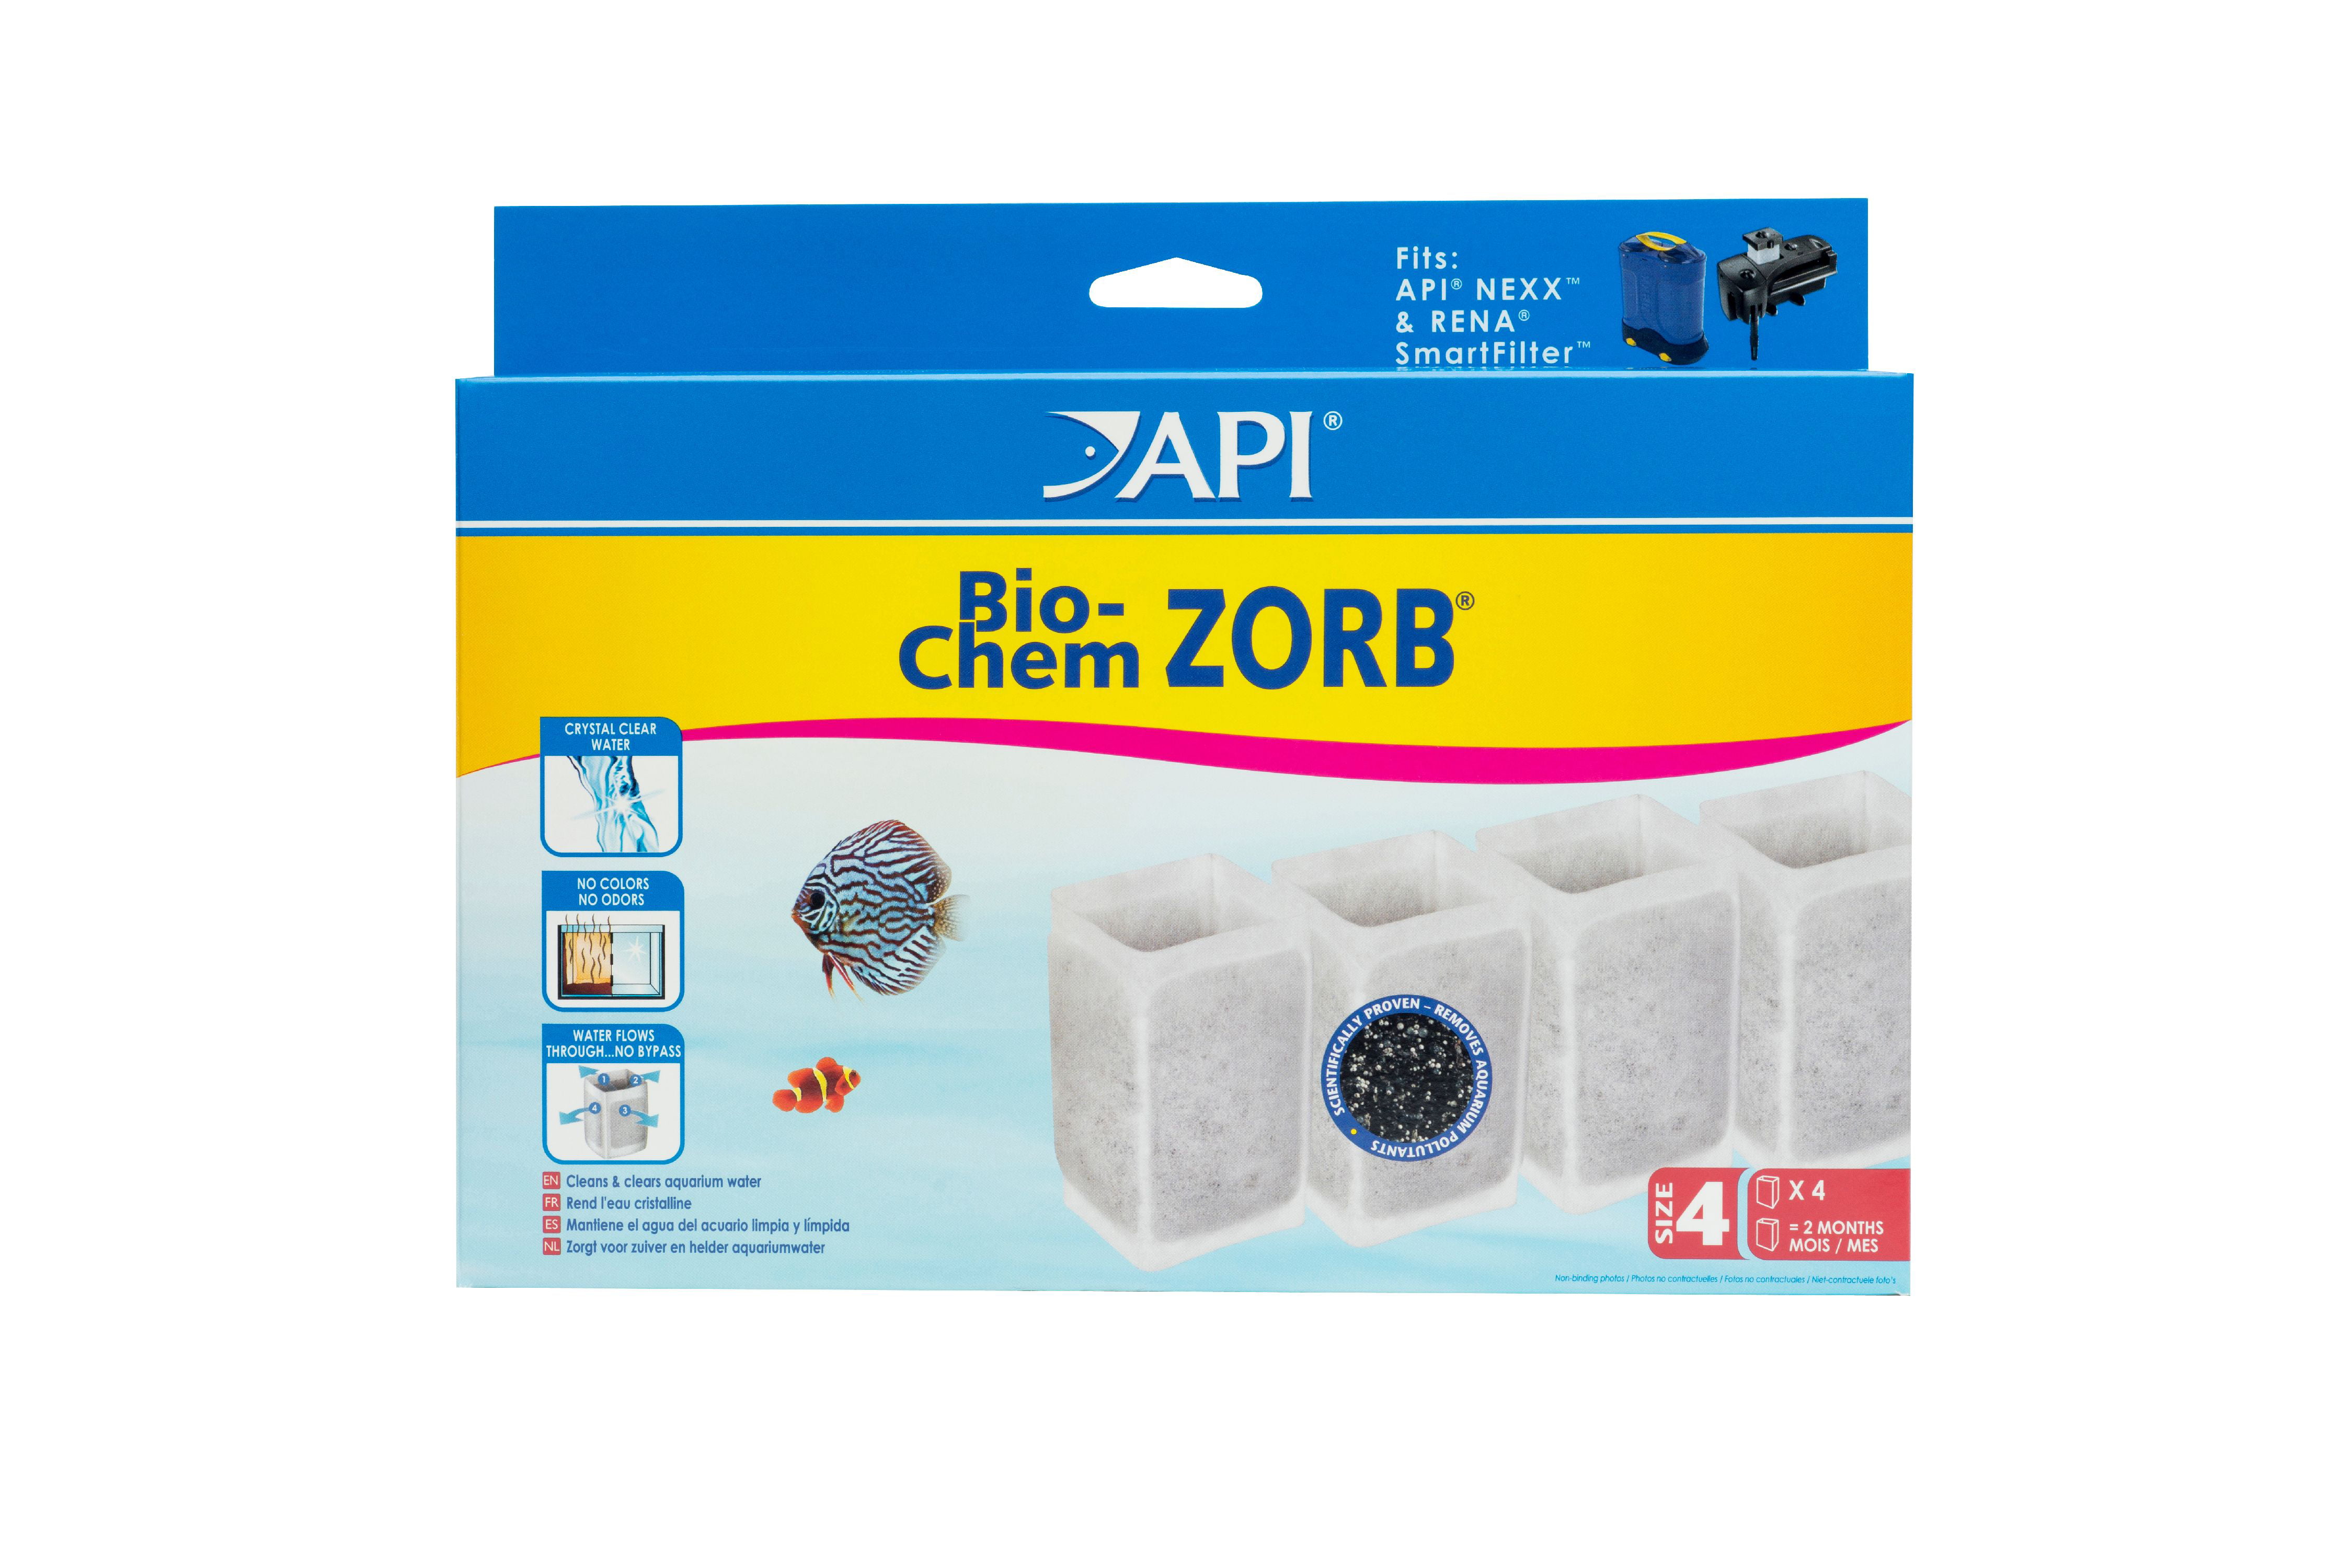 API CRYSTAL BIO-CHEM ZORB SIZE 4 Aquarium Filtration Media Cartridges NEXX filters 4-Count Box